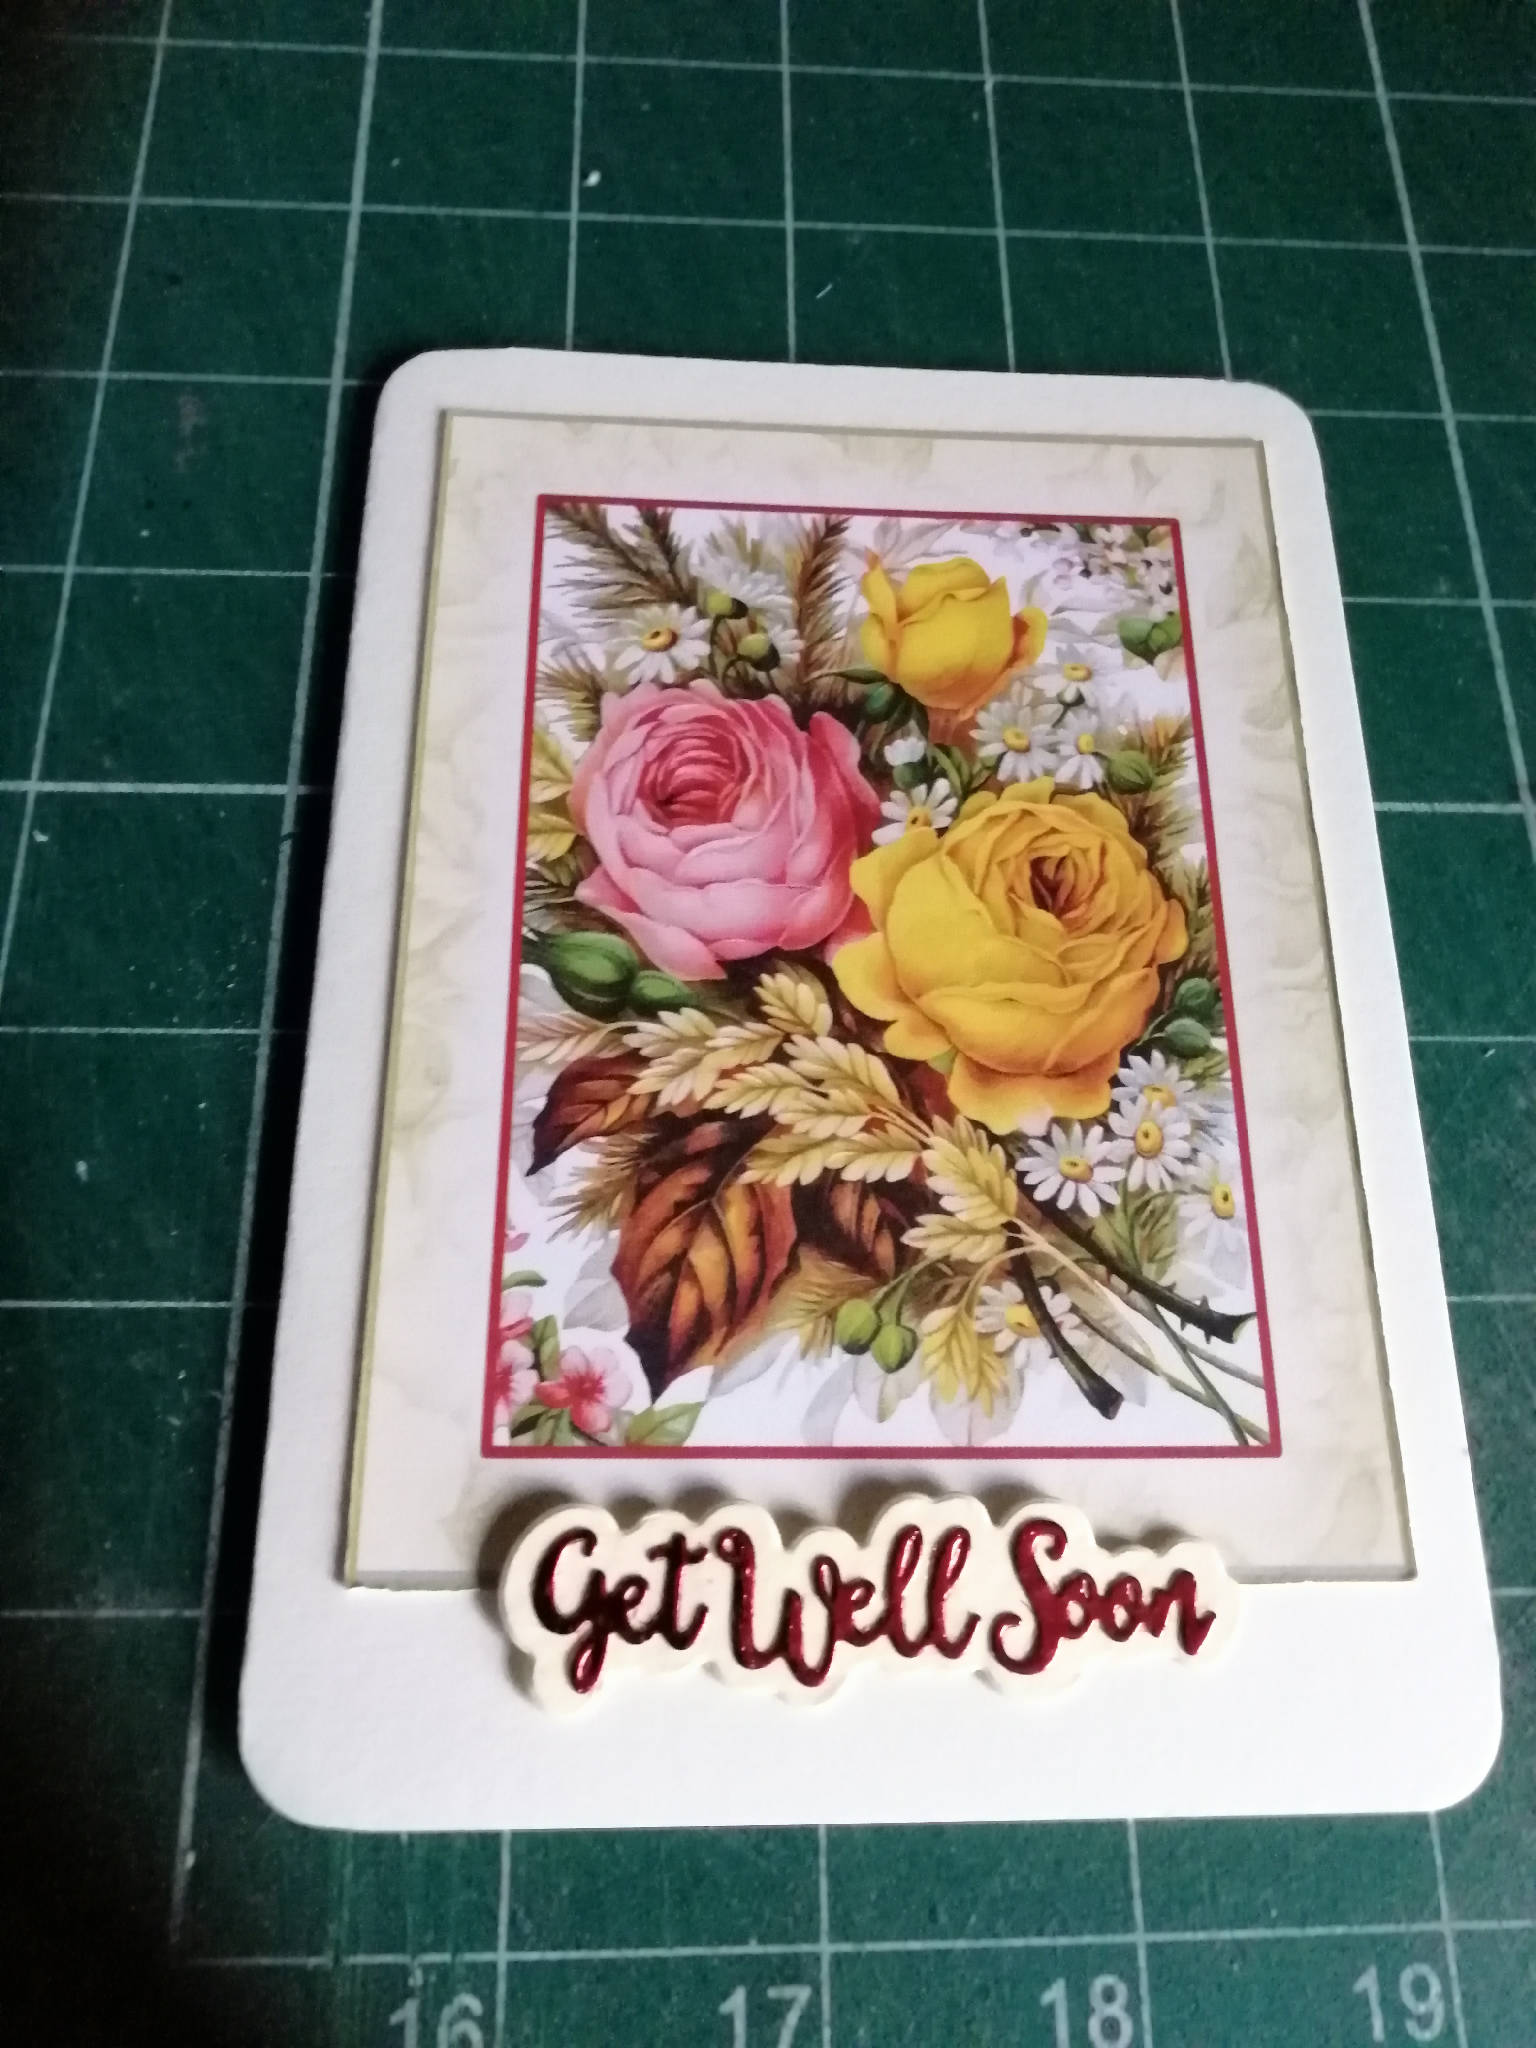 Get Well Soon Handmade card